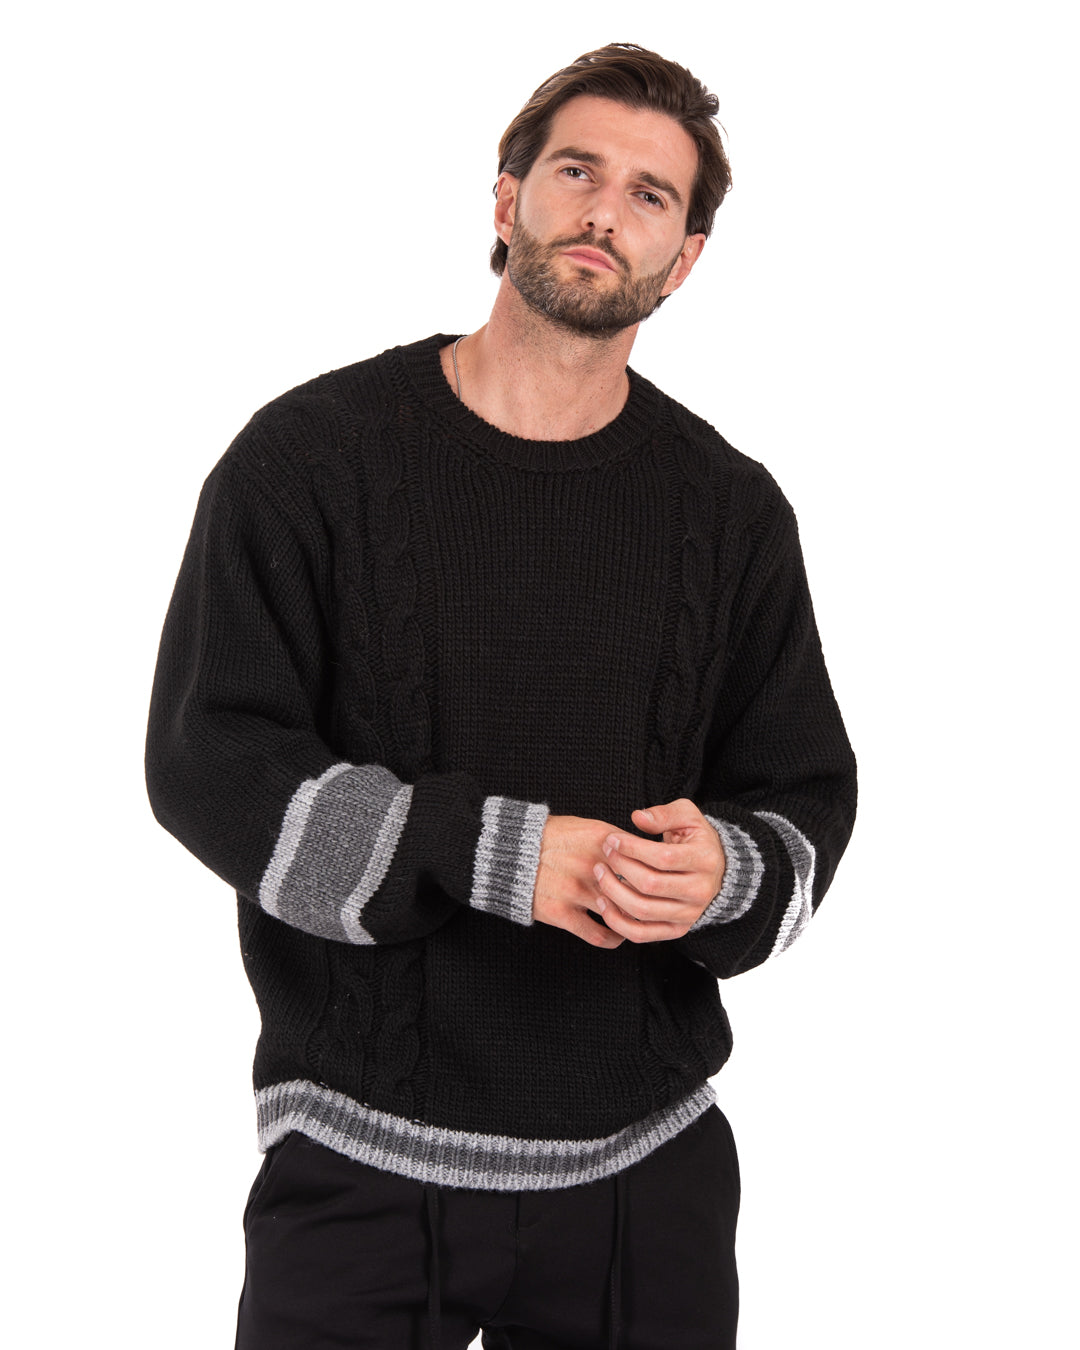 Edam - black sweater with side braids